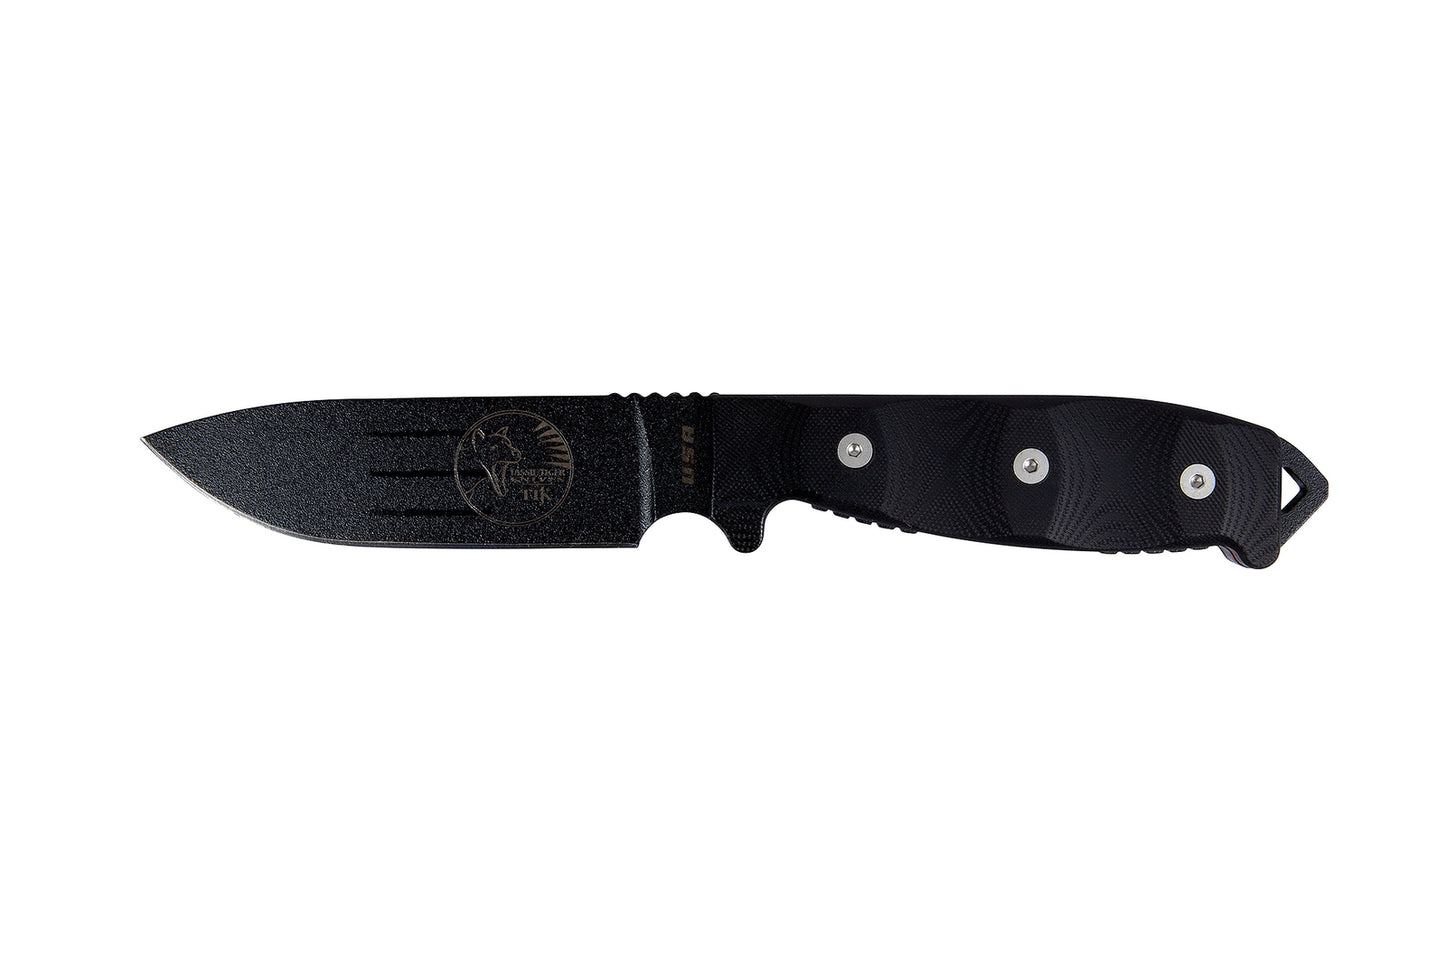 Tassie Tiger Knives Tassie Tiger Survival Hunting Outdoor Fixed Blade Knife W Sheath - High Carbon Steel #ttks5 Black